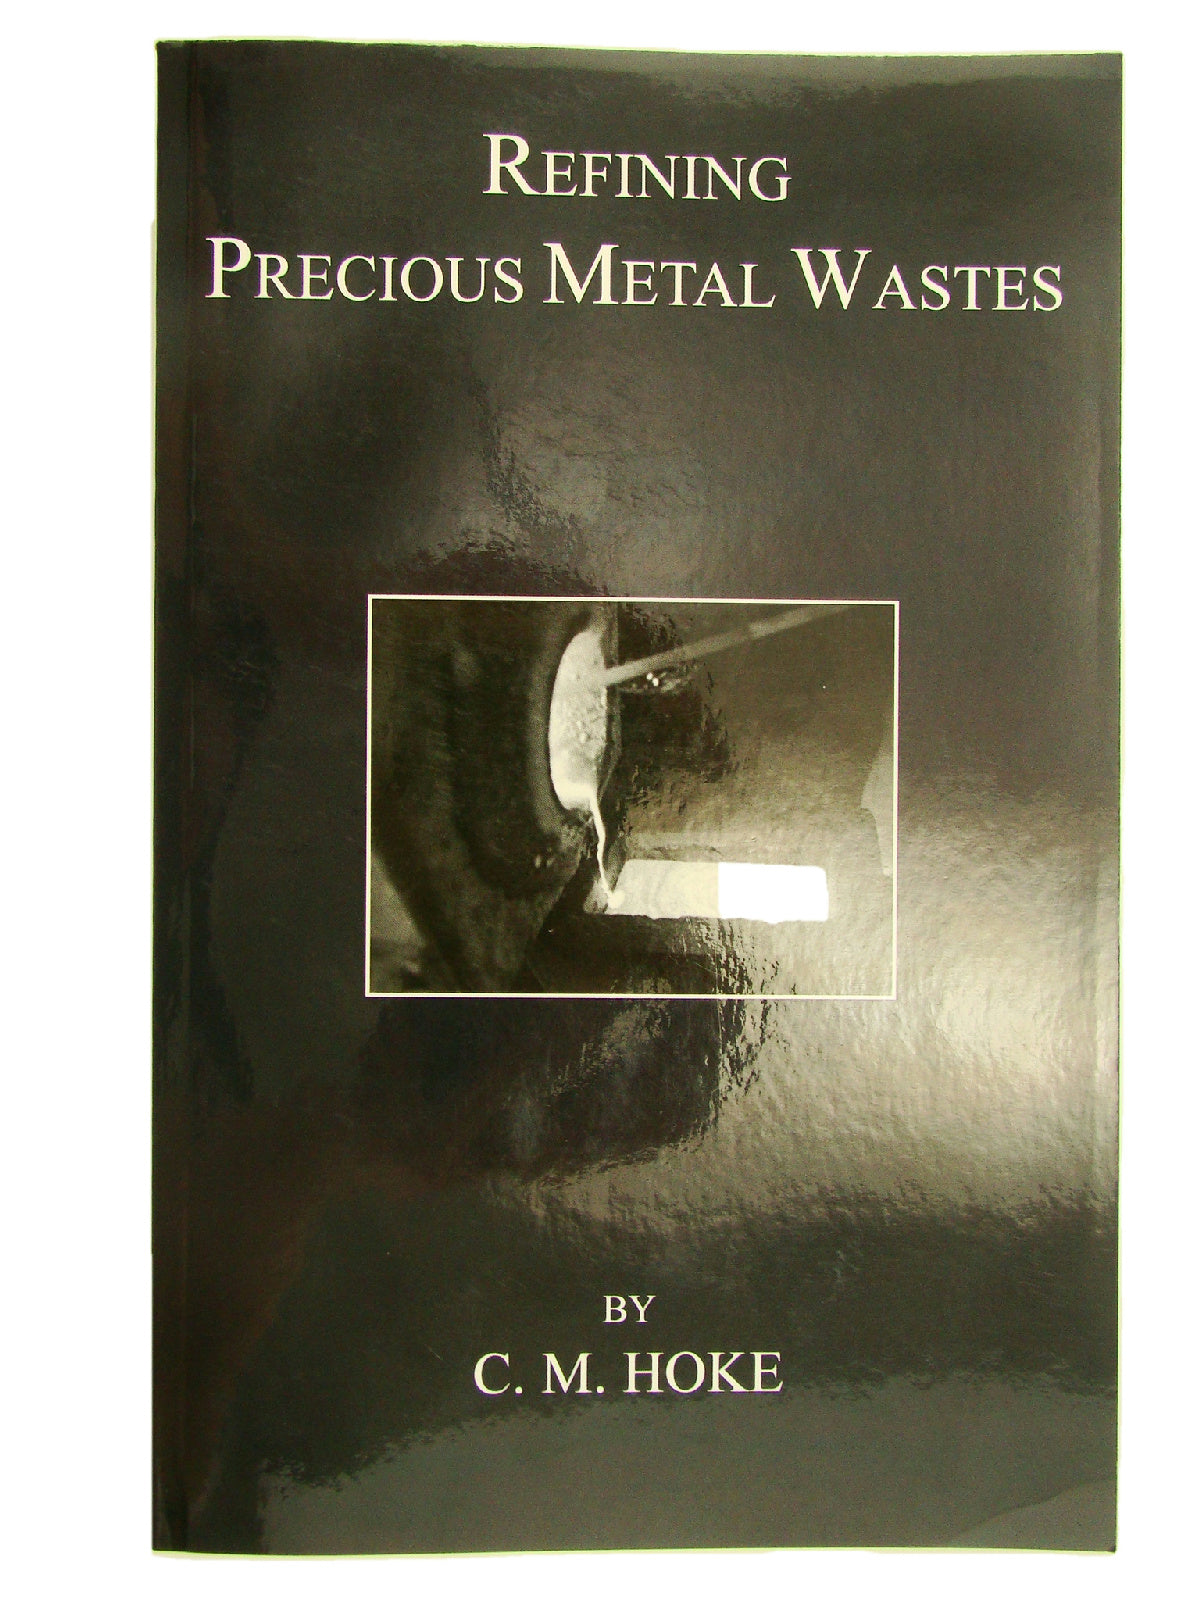 "Refining Precious Metal Wastes" by C. M Hoke-362pg Book-Gold-Rhodium-DIY